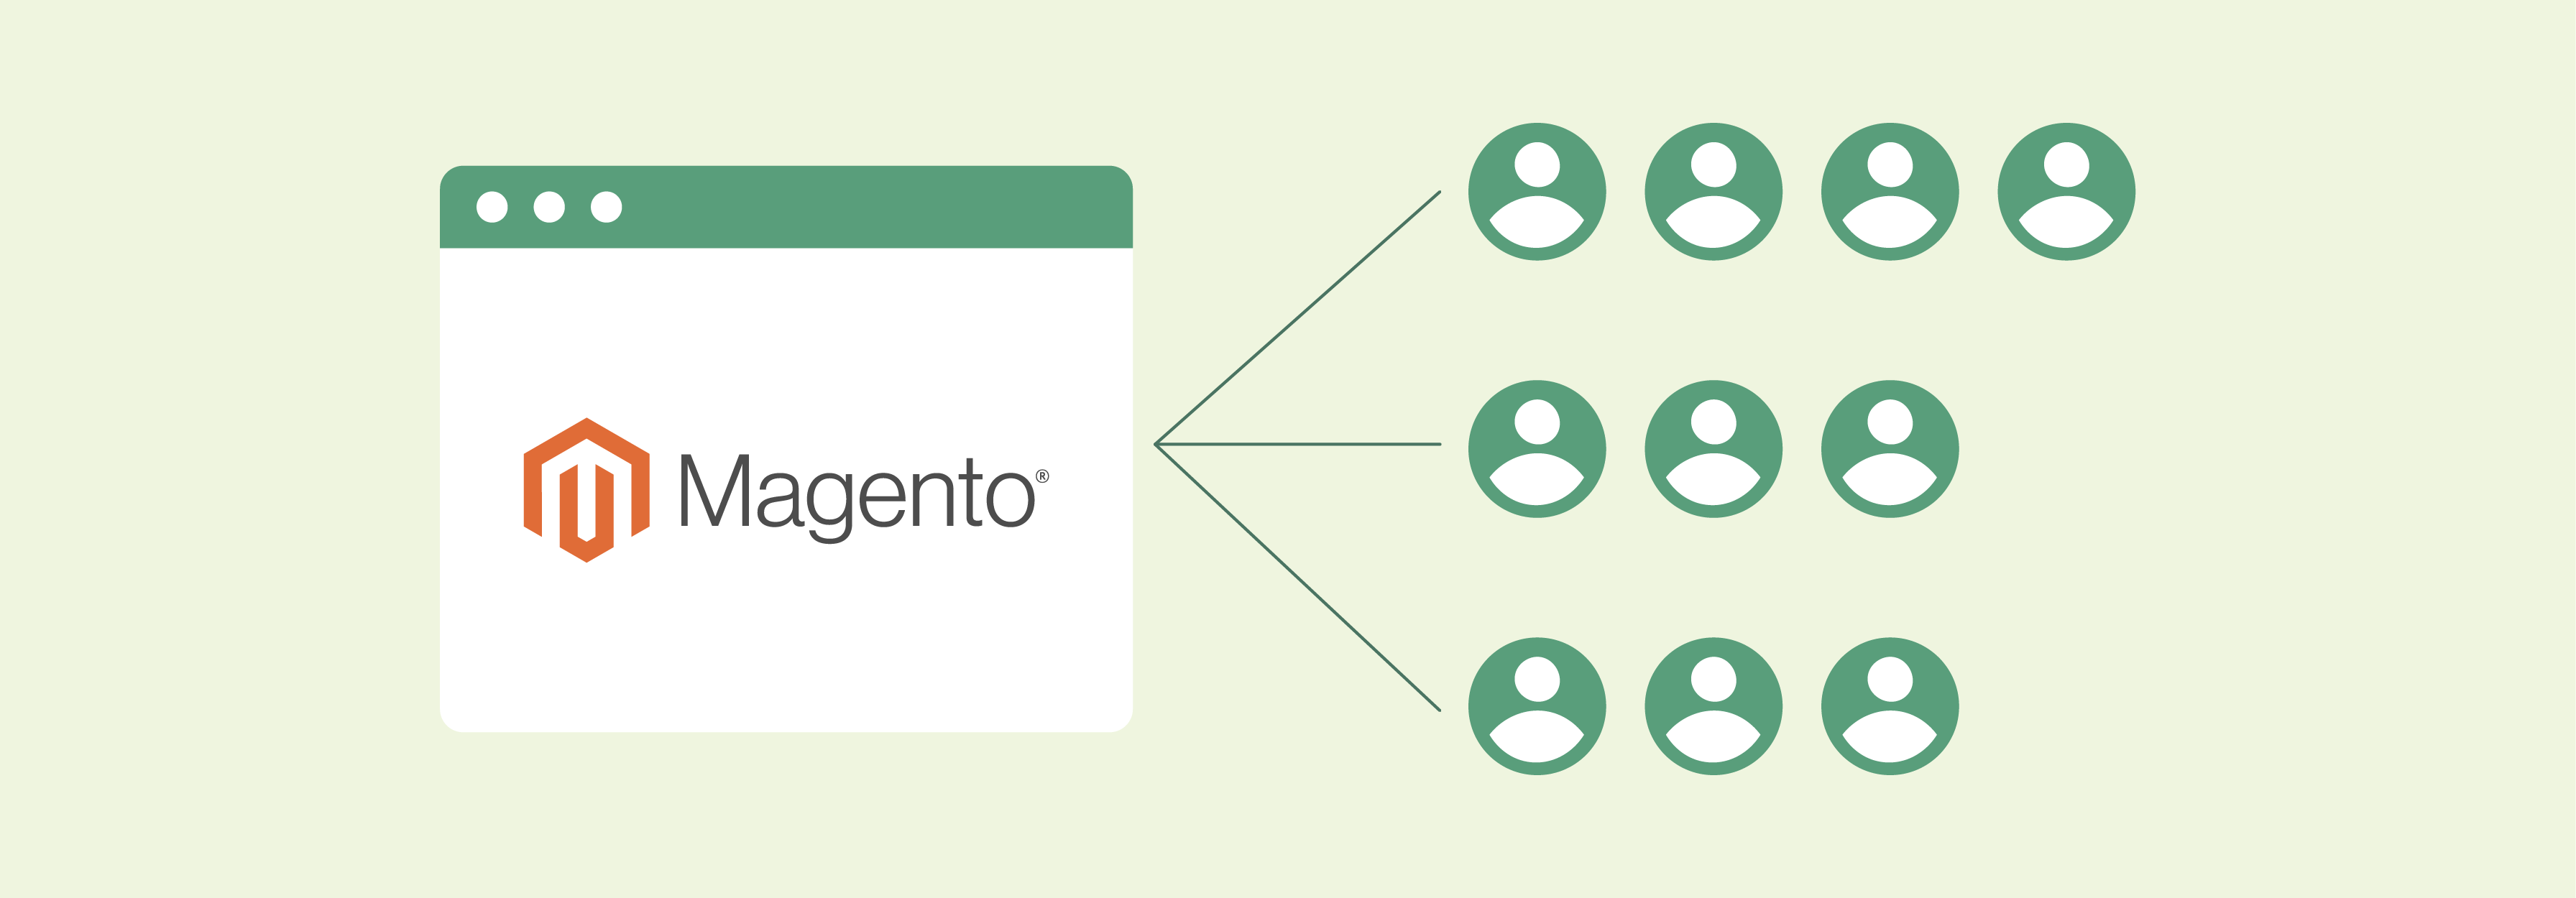 Detailed segmentation strategies for Magento email marketing